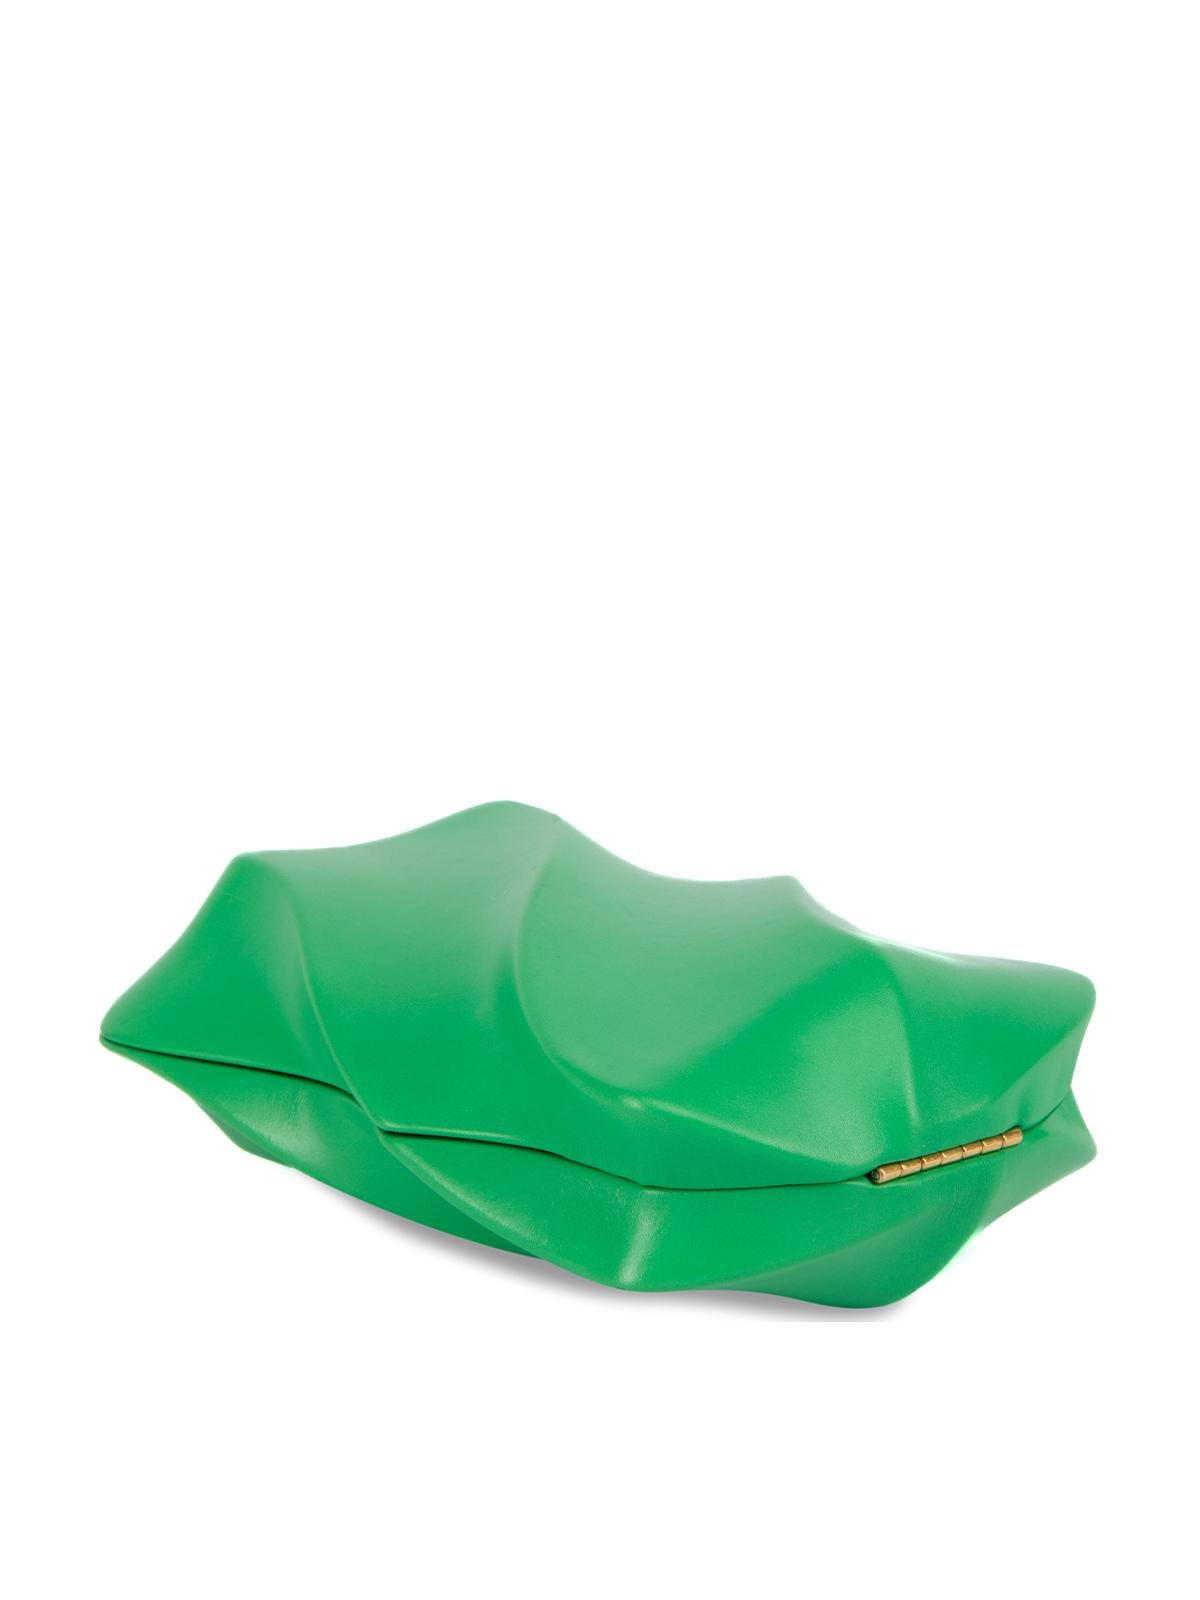 Pre-Loved Bottega Veneta Women's Green Whirl Spiral Clutch Bag 1